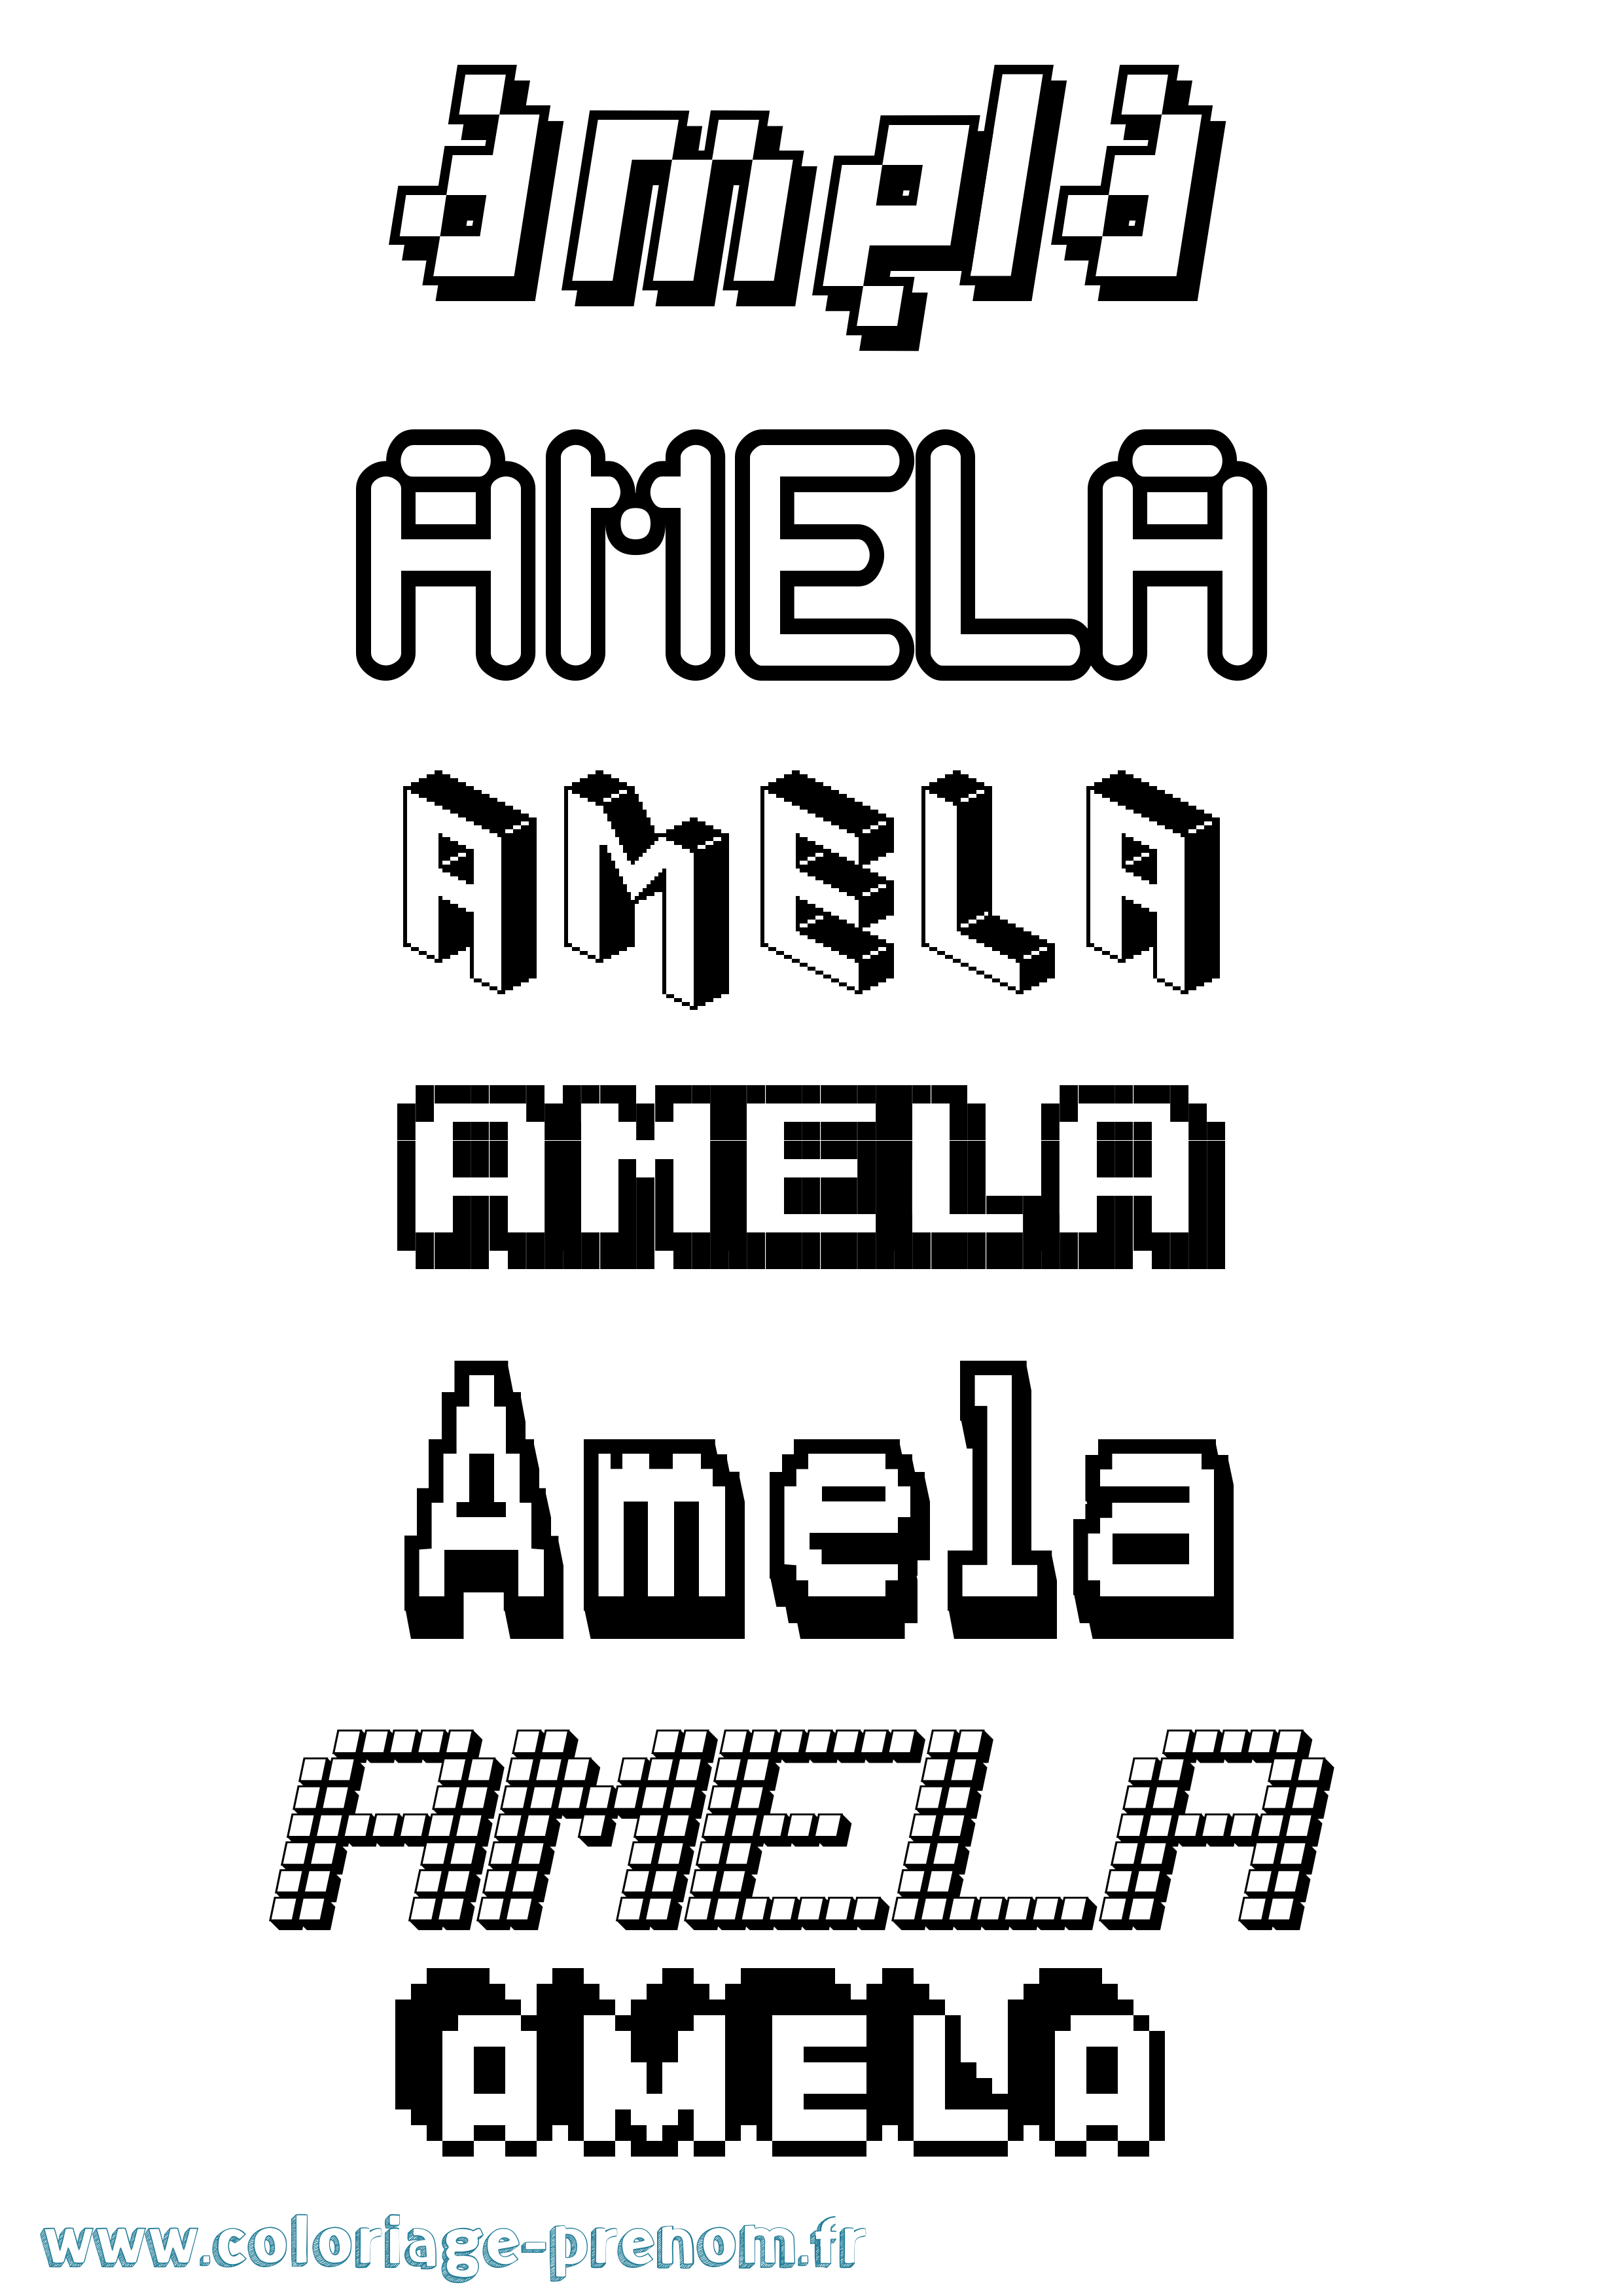 Coloriage prénom Amela Pixel